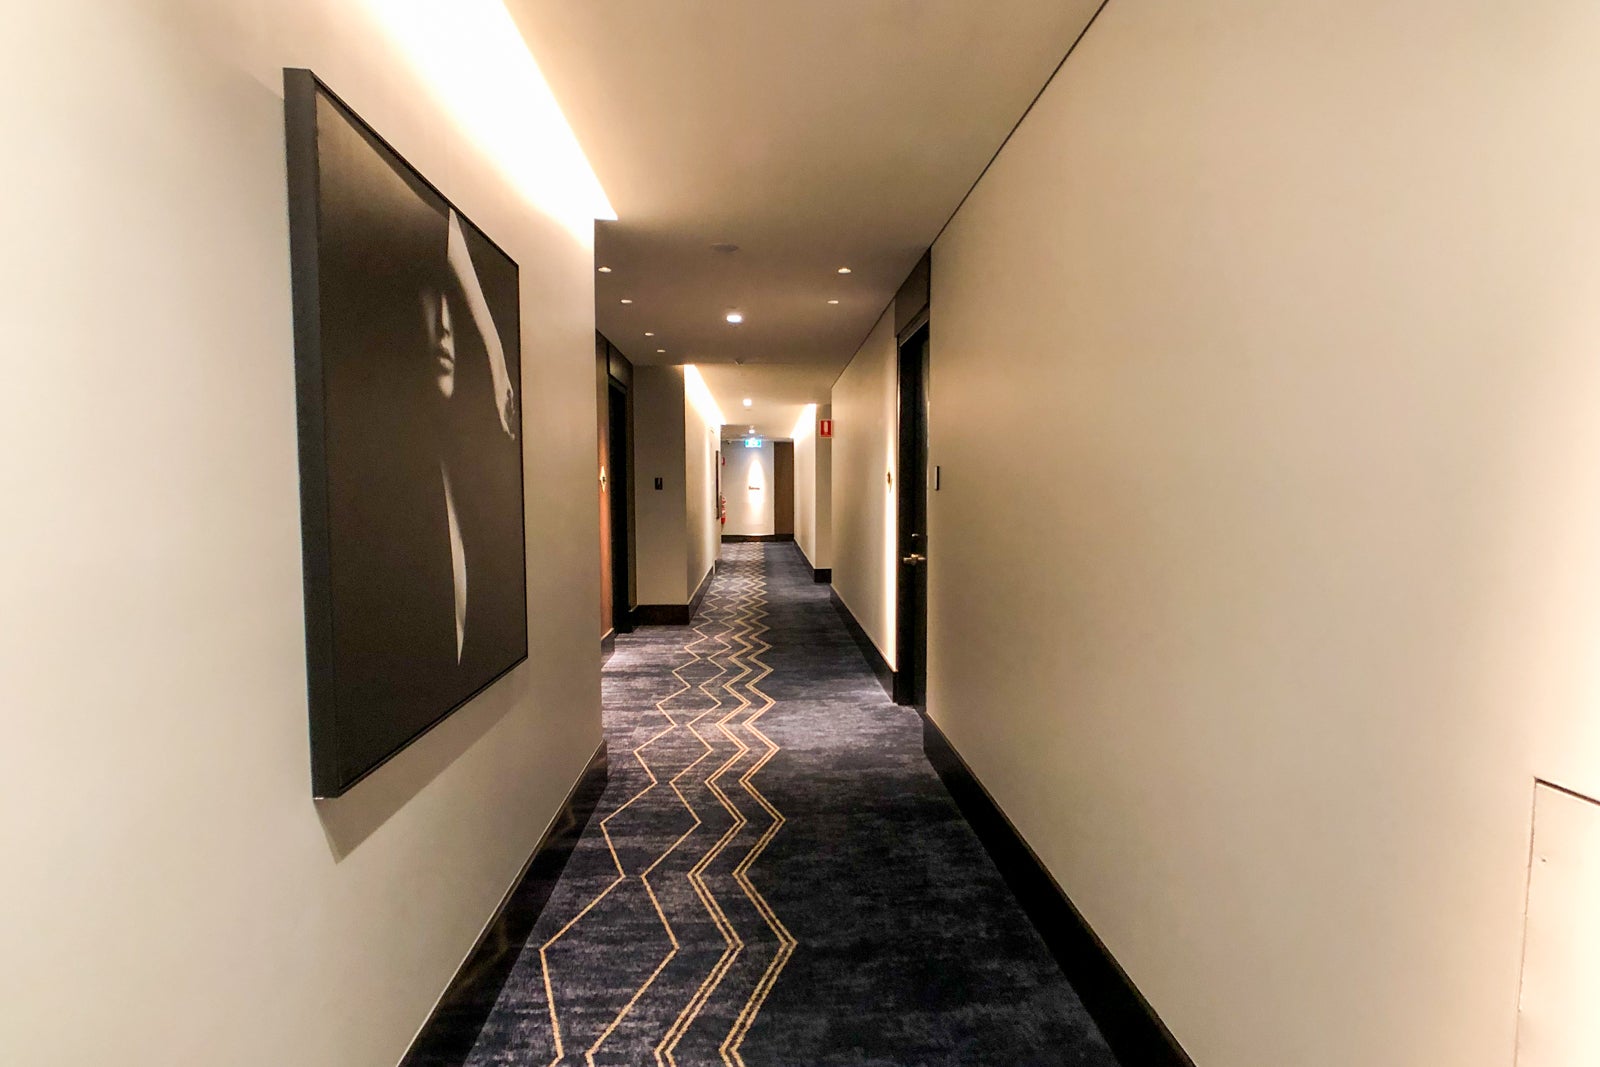 The Fall Guy filming locations in Sydney, Australia - Kimpton Margot Hotel corridor